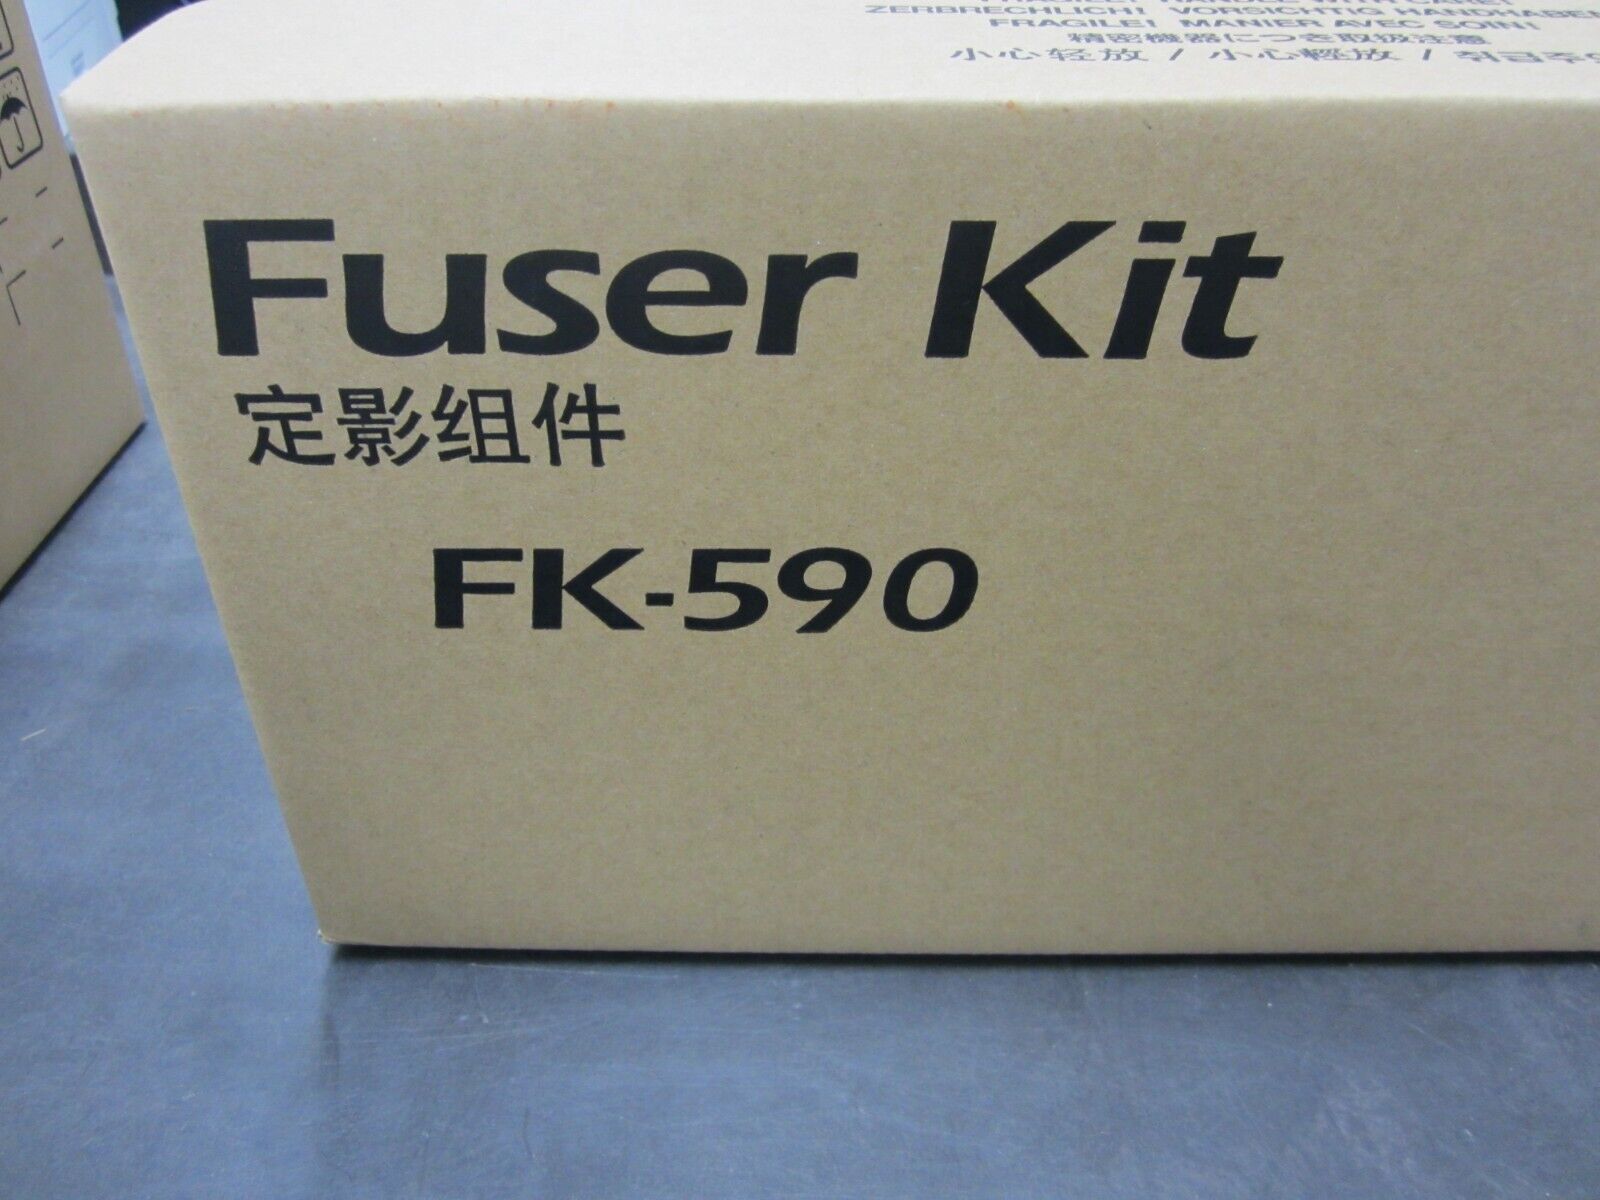 Genuine Kyocera FK-590 Fuser Kit